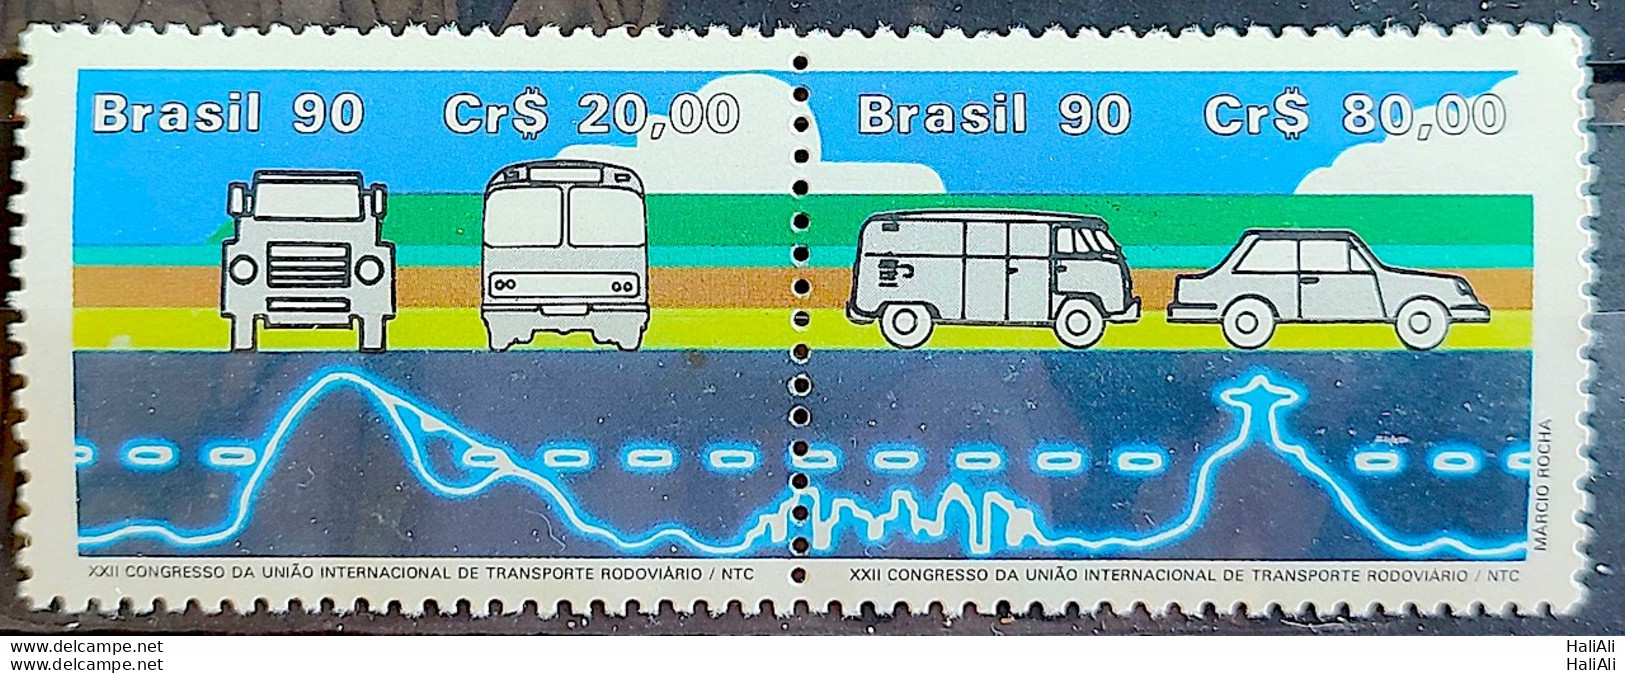 C 1681 Brazil Stamp International Transport Congress Truck Bus Car Rio De Janeiro 1990 - Unused Stamps